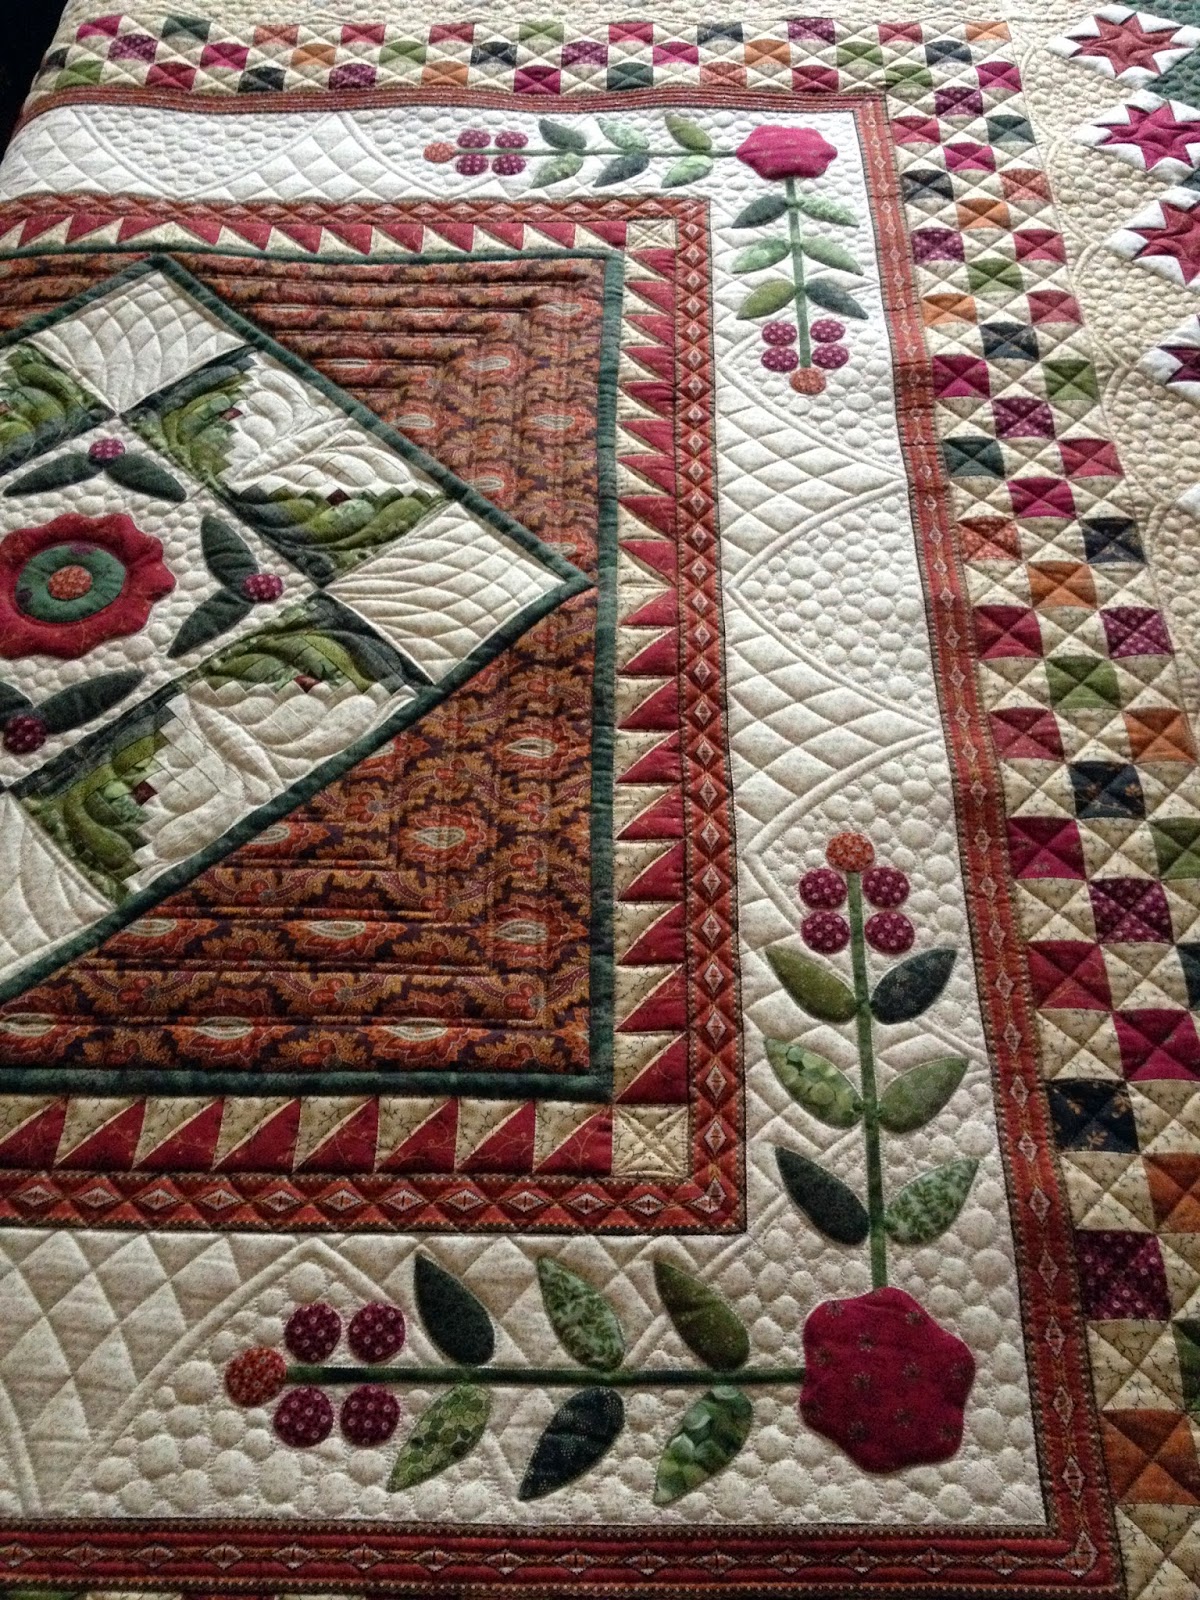 quilt-patchwork-pattern